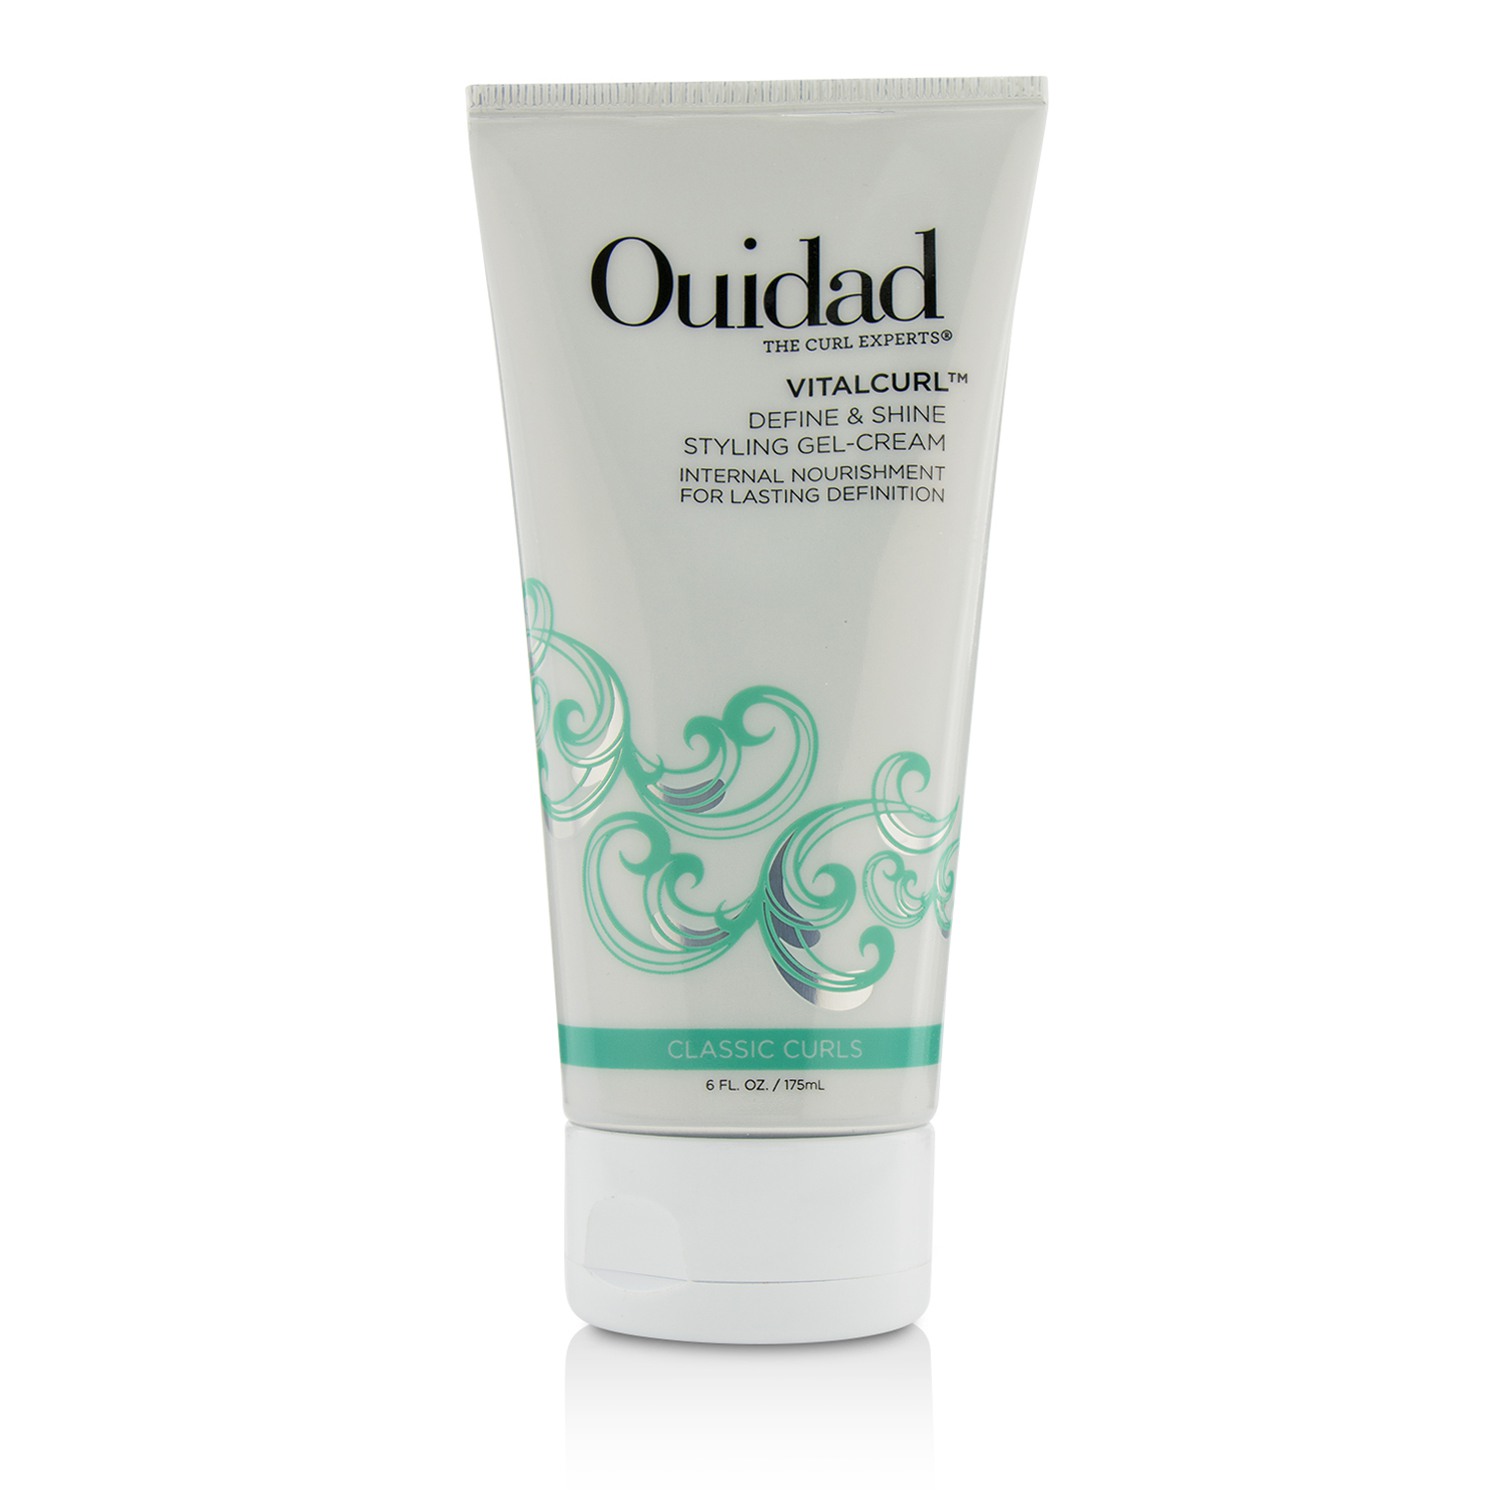 VitalCurl Define & Shine Styling Gel-Cream (Classic Curls) Ouidad Image